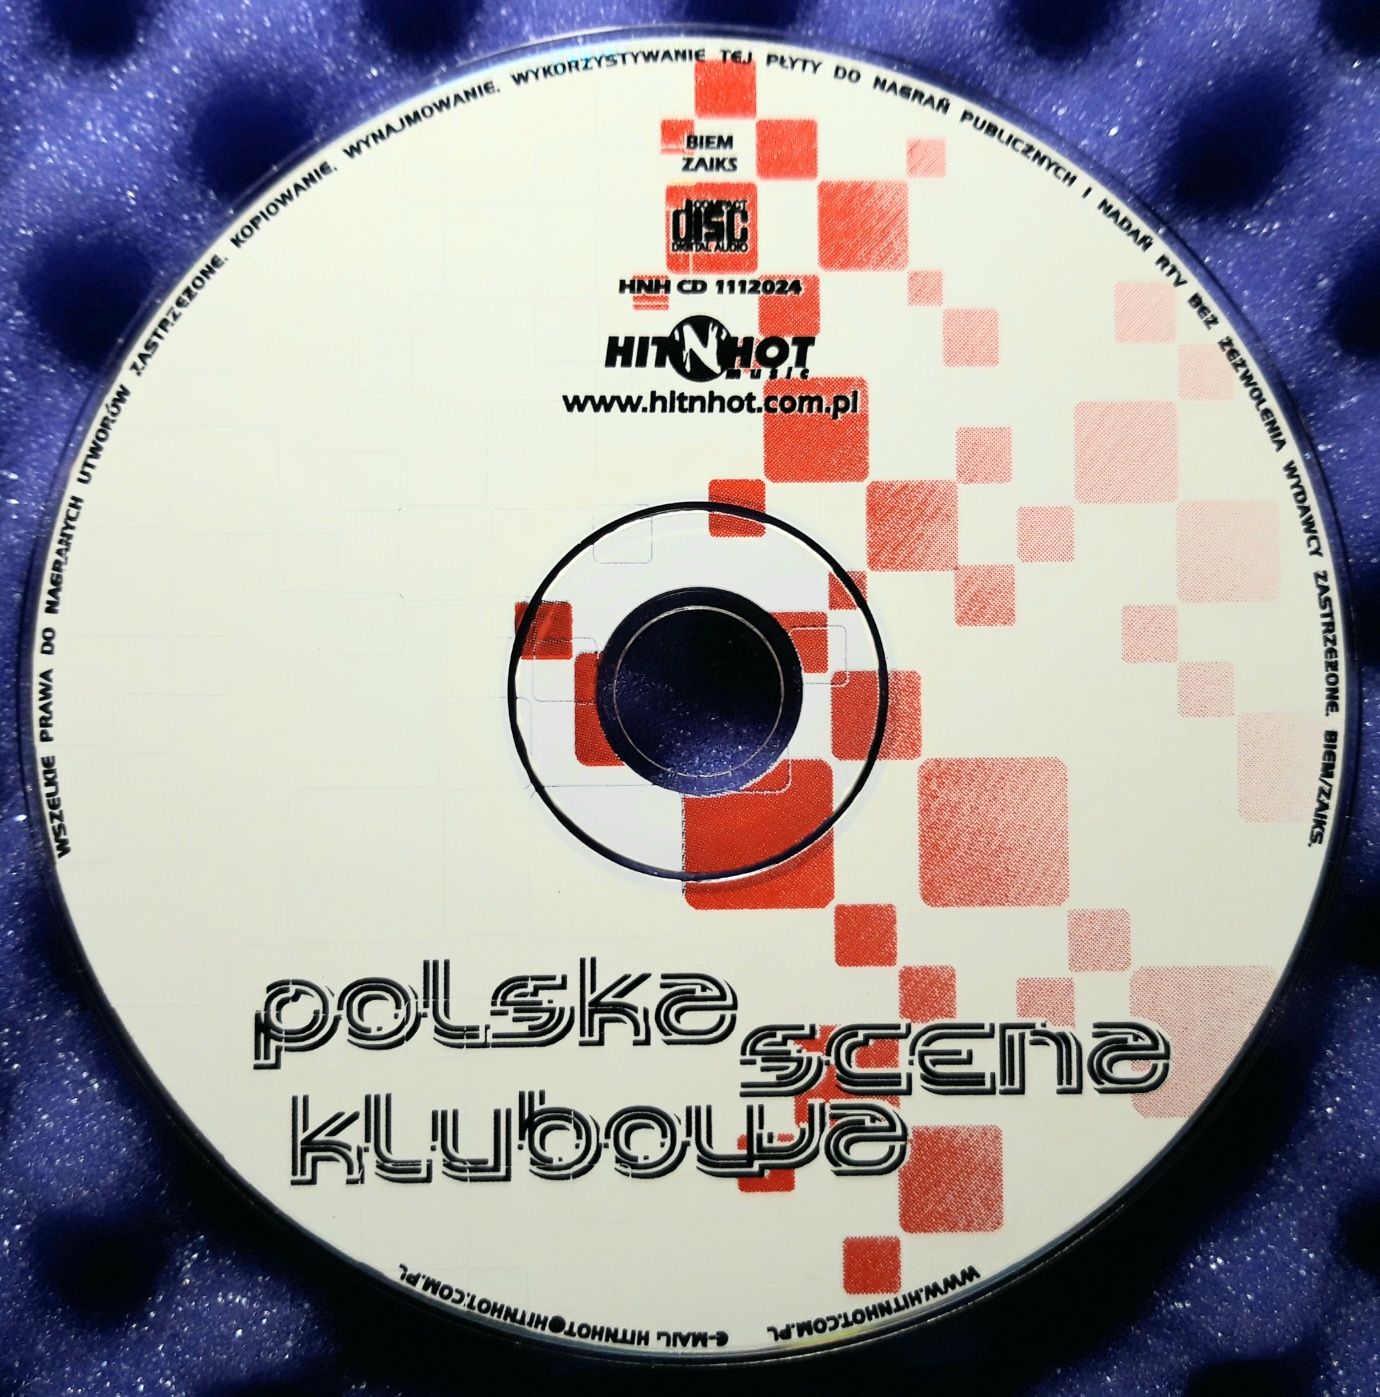 Polska Scena Klubowa (CD, 2001)